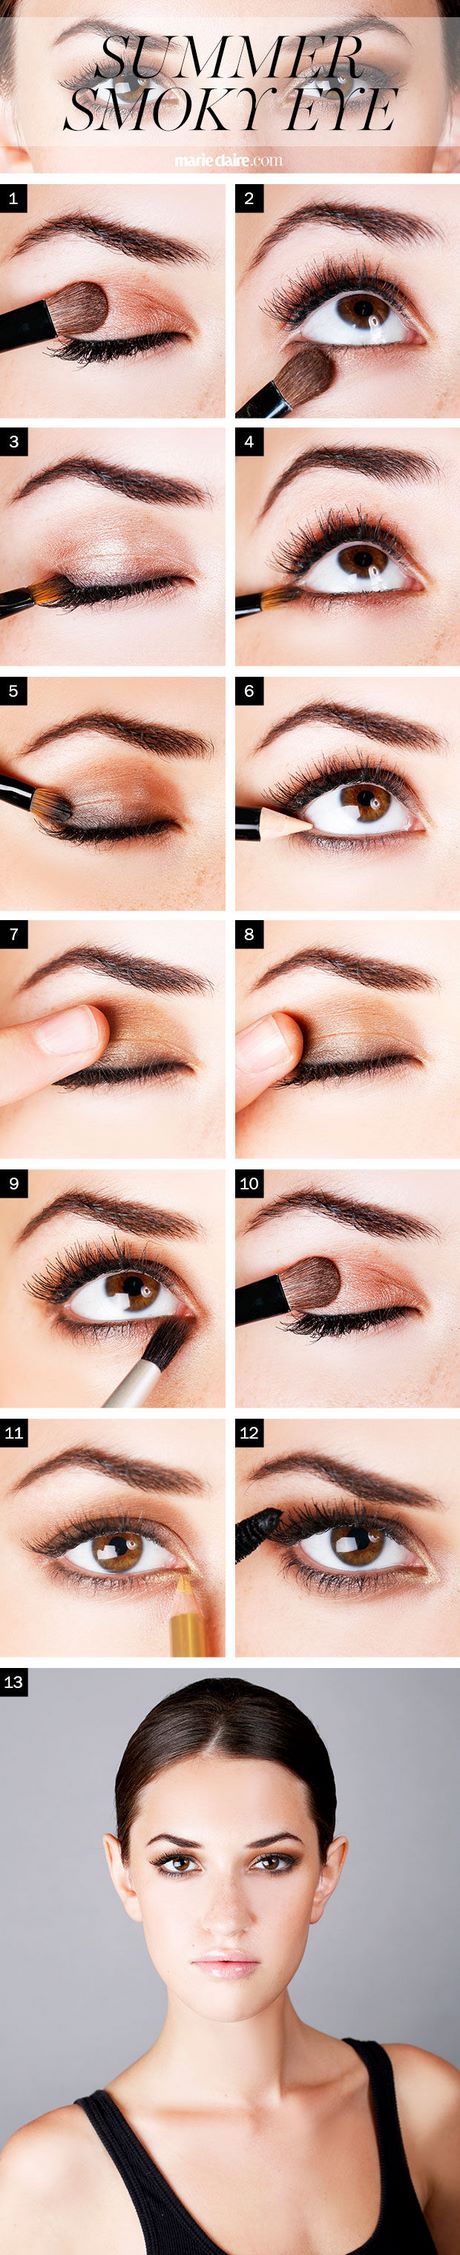 self-eye-makeup-tutorial-02_4 Zelf oog make-up tutorial